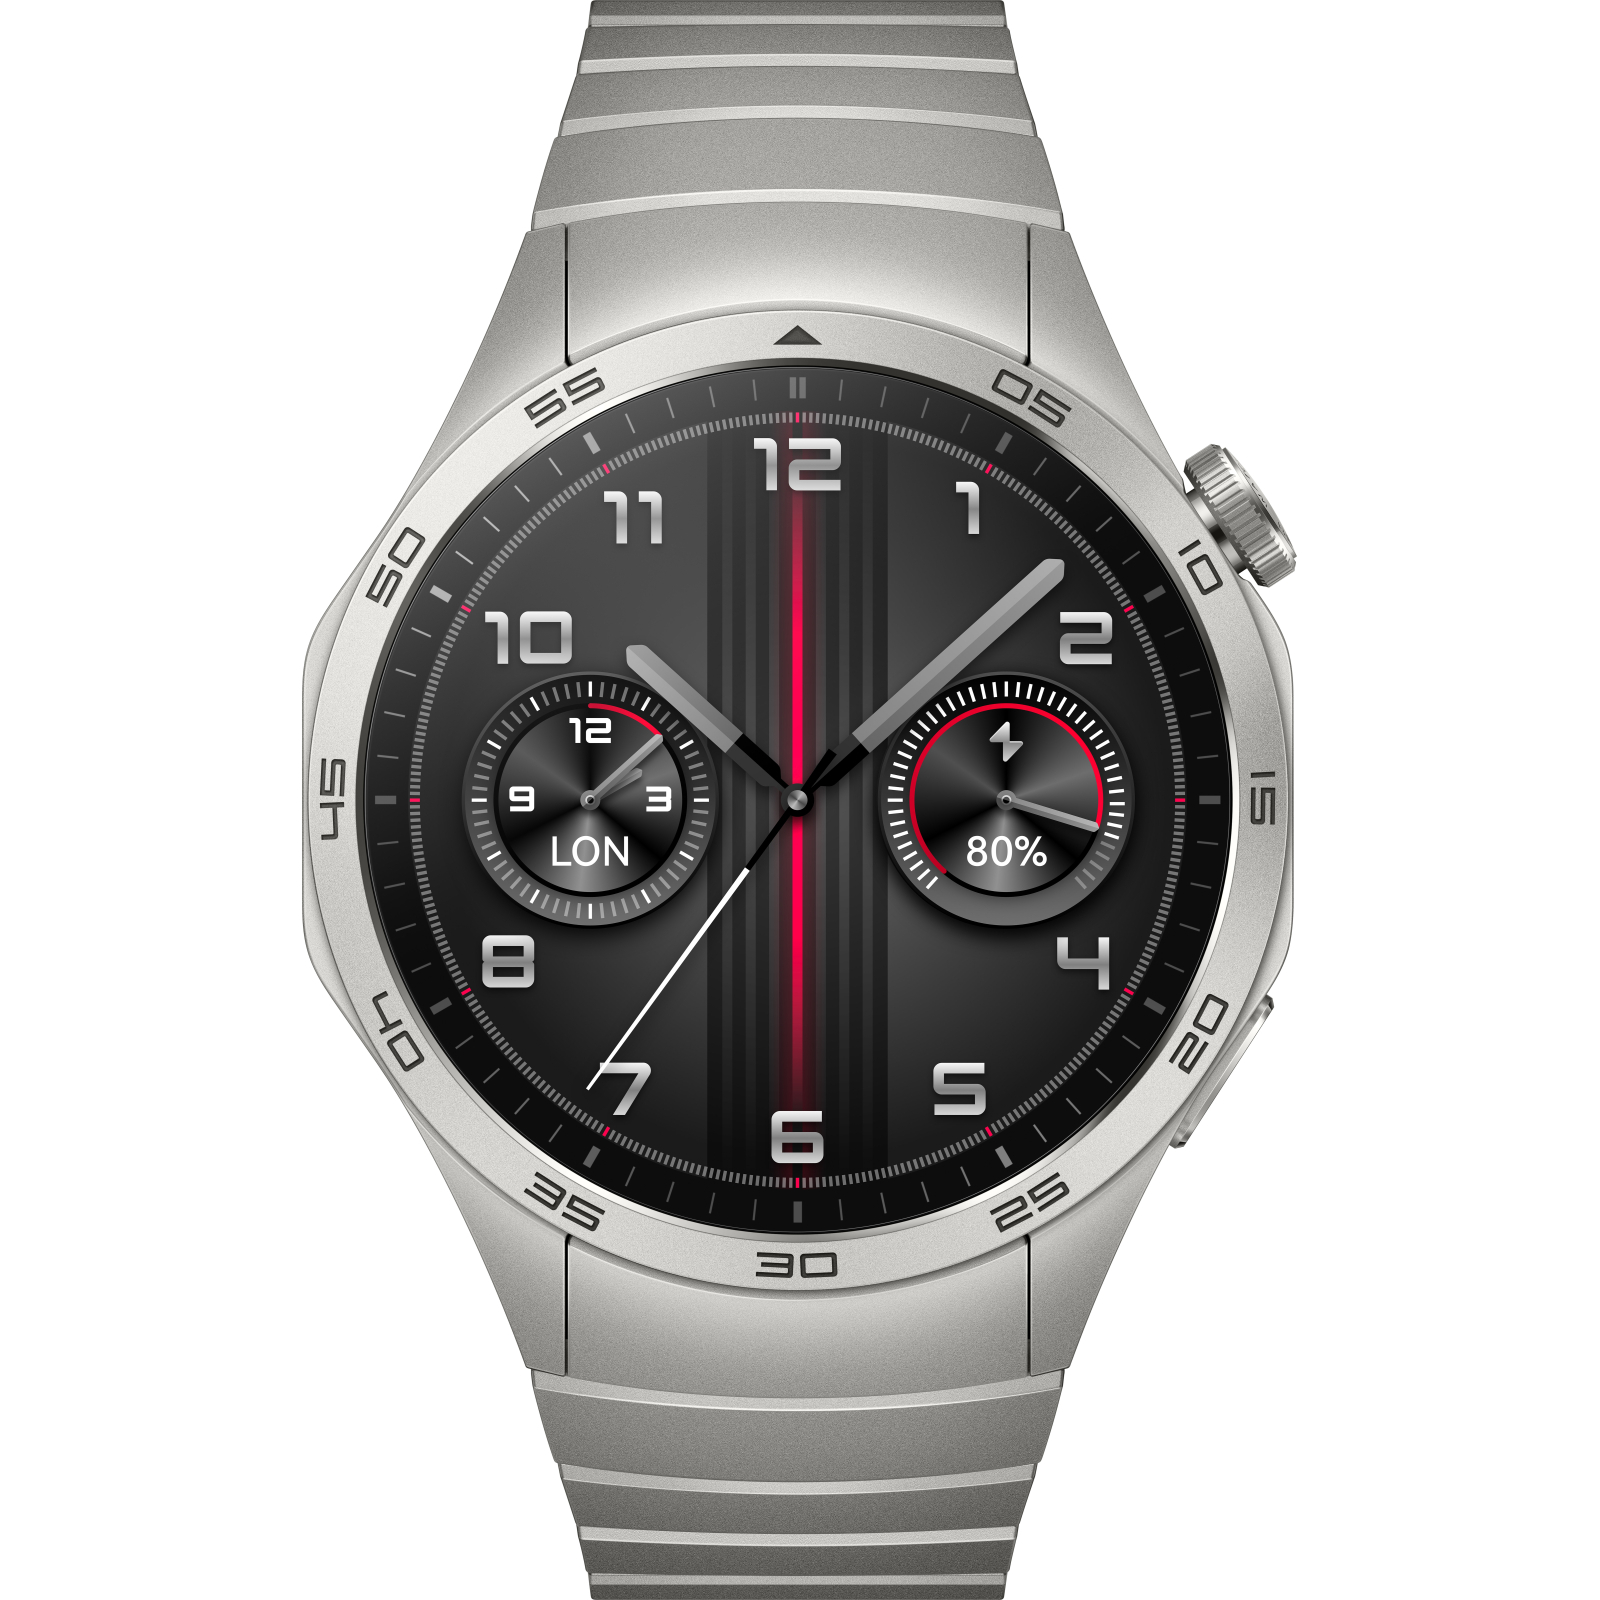 Смарт-часы Huawei WATCH GT 4 46mm Classic Brown Leather (55020BGW) изображение 2